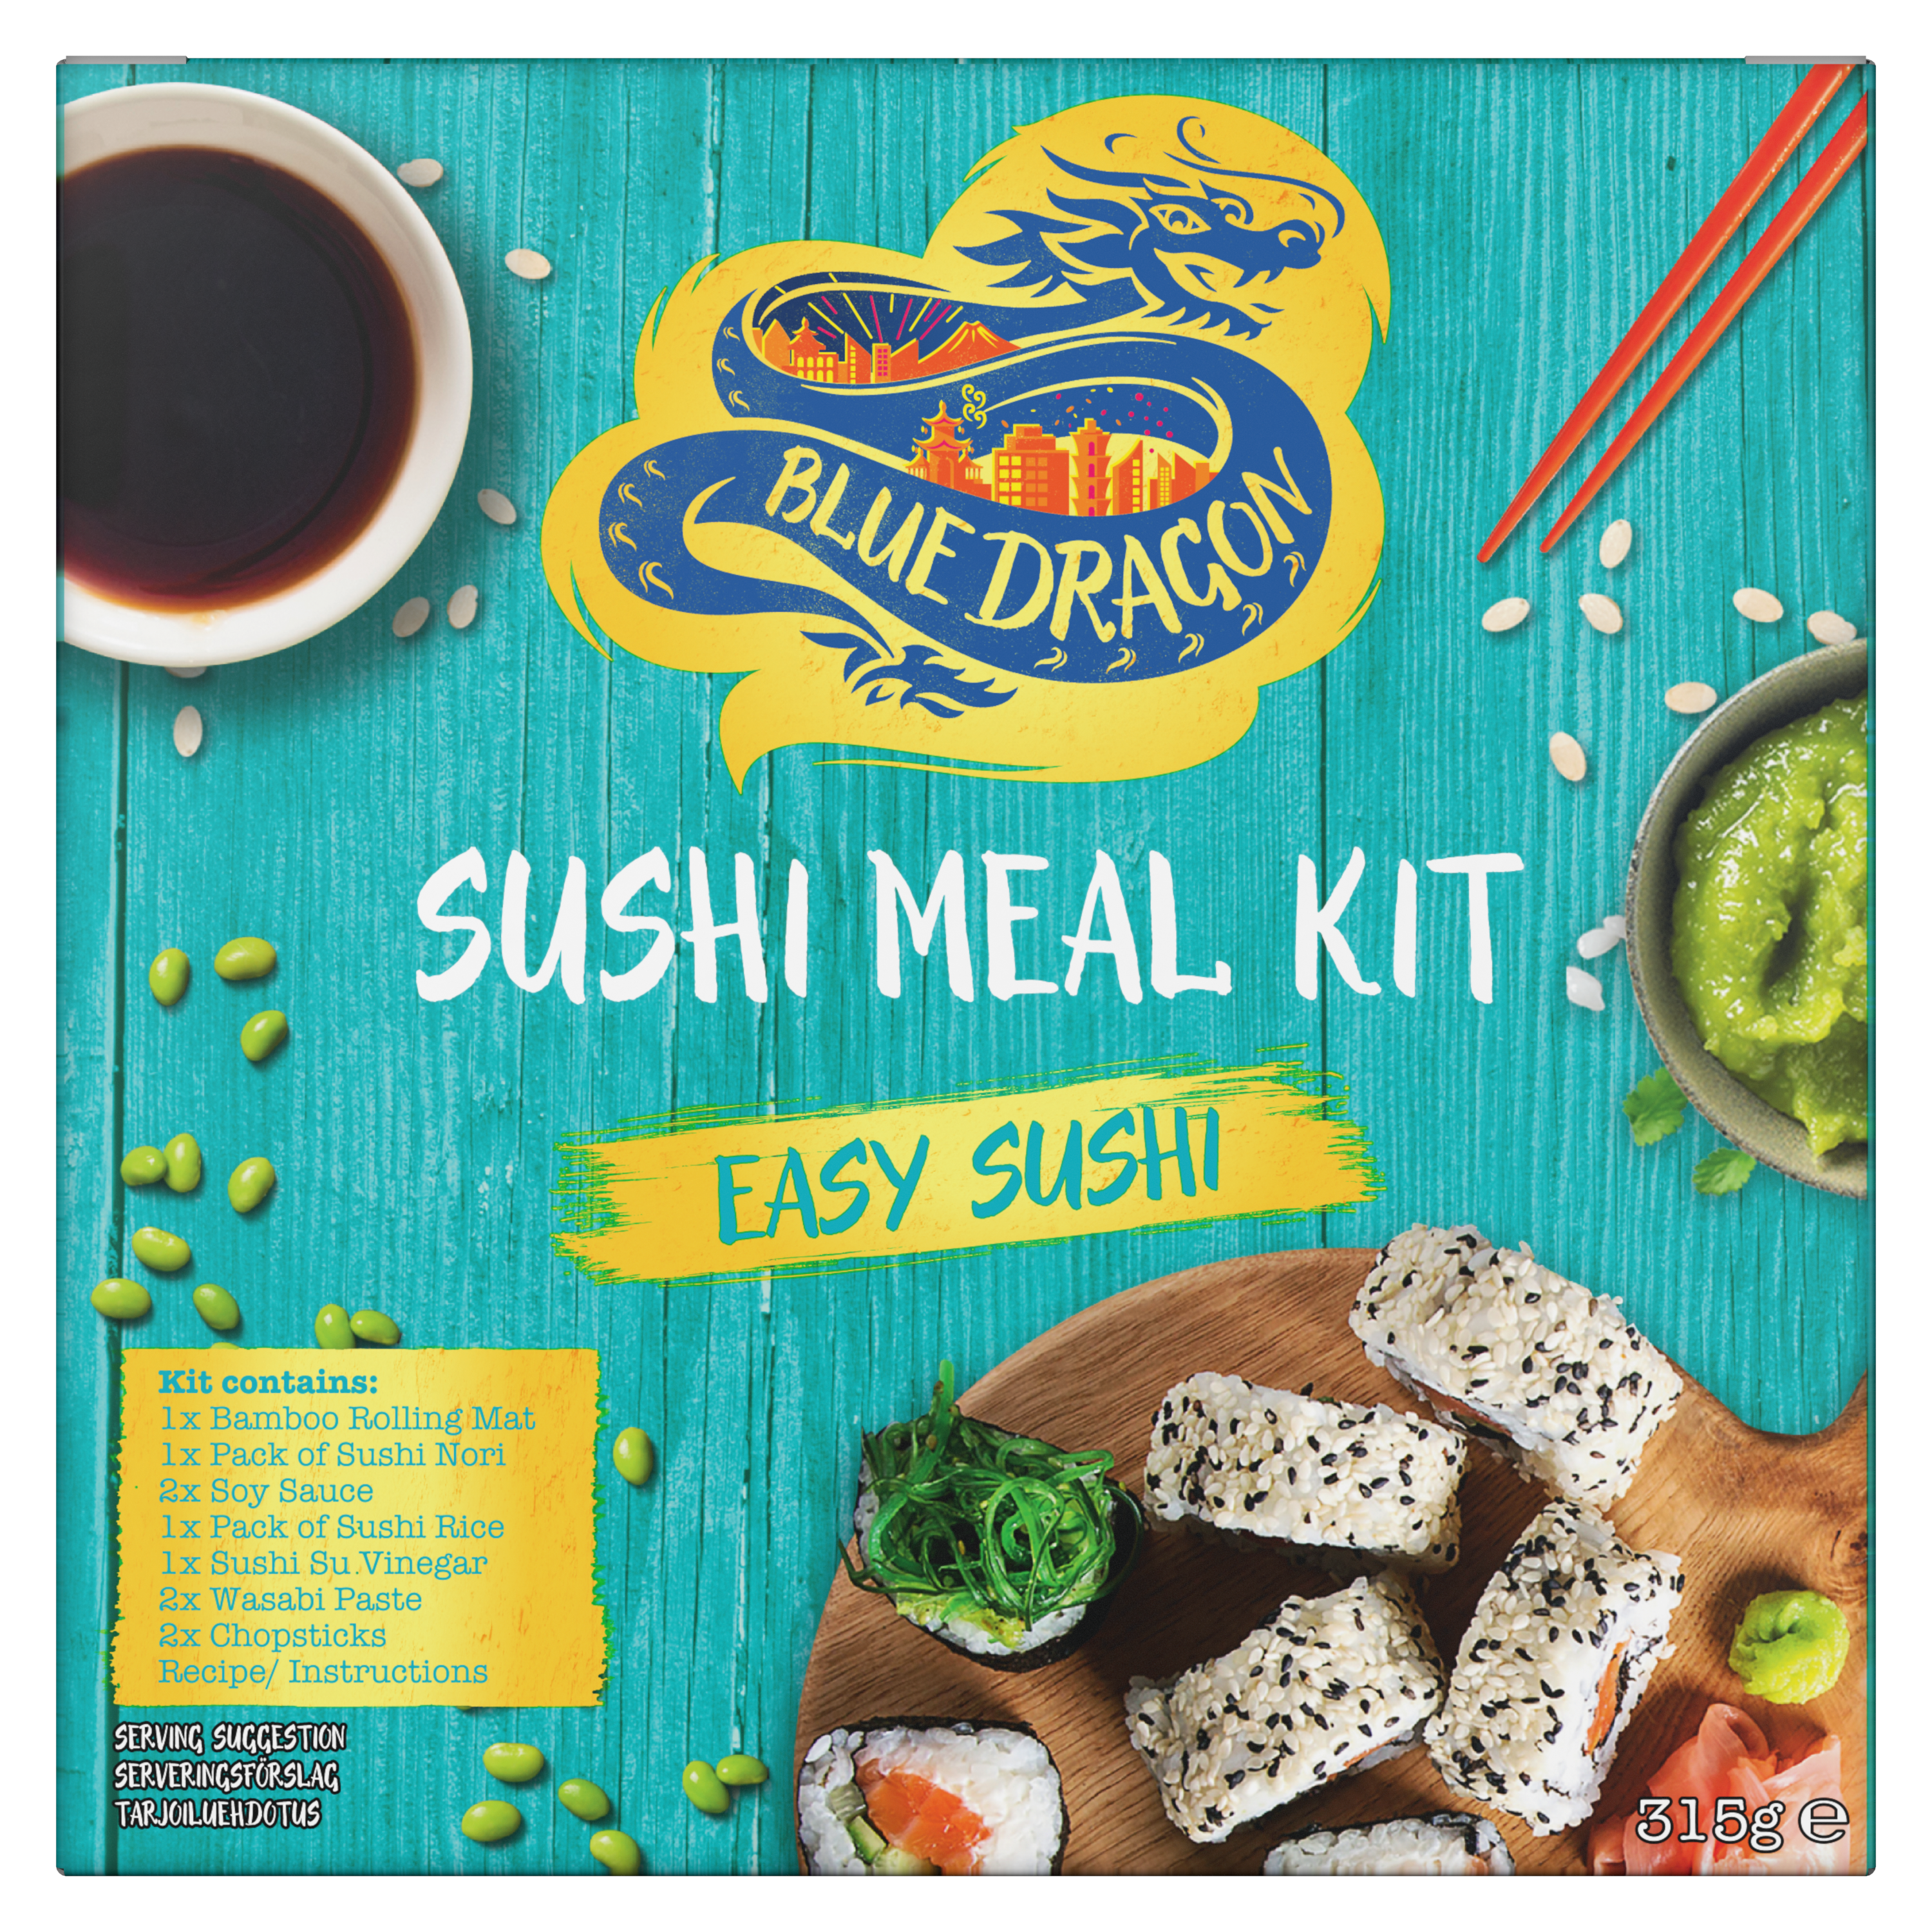 BLUE DRAGON SUSHI MEAL KIT – Blue Dragon Sushi